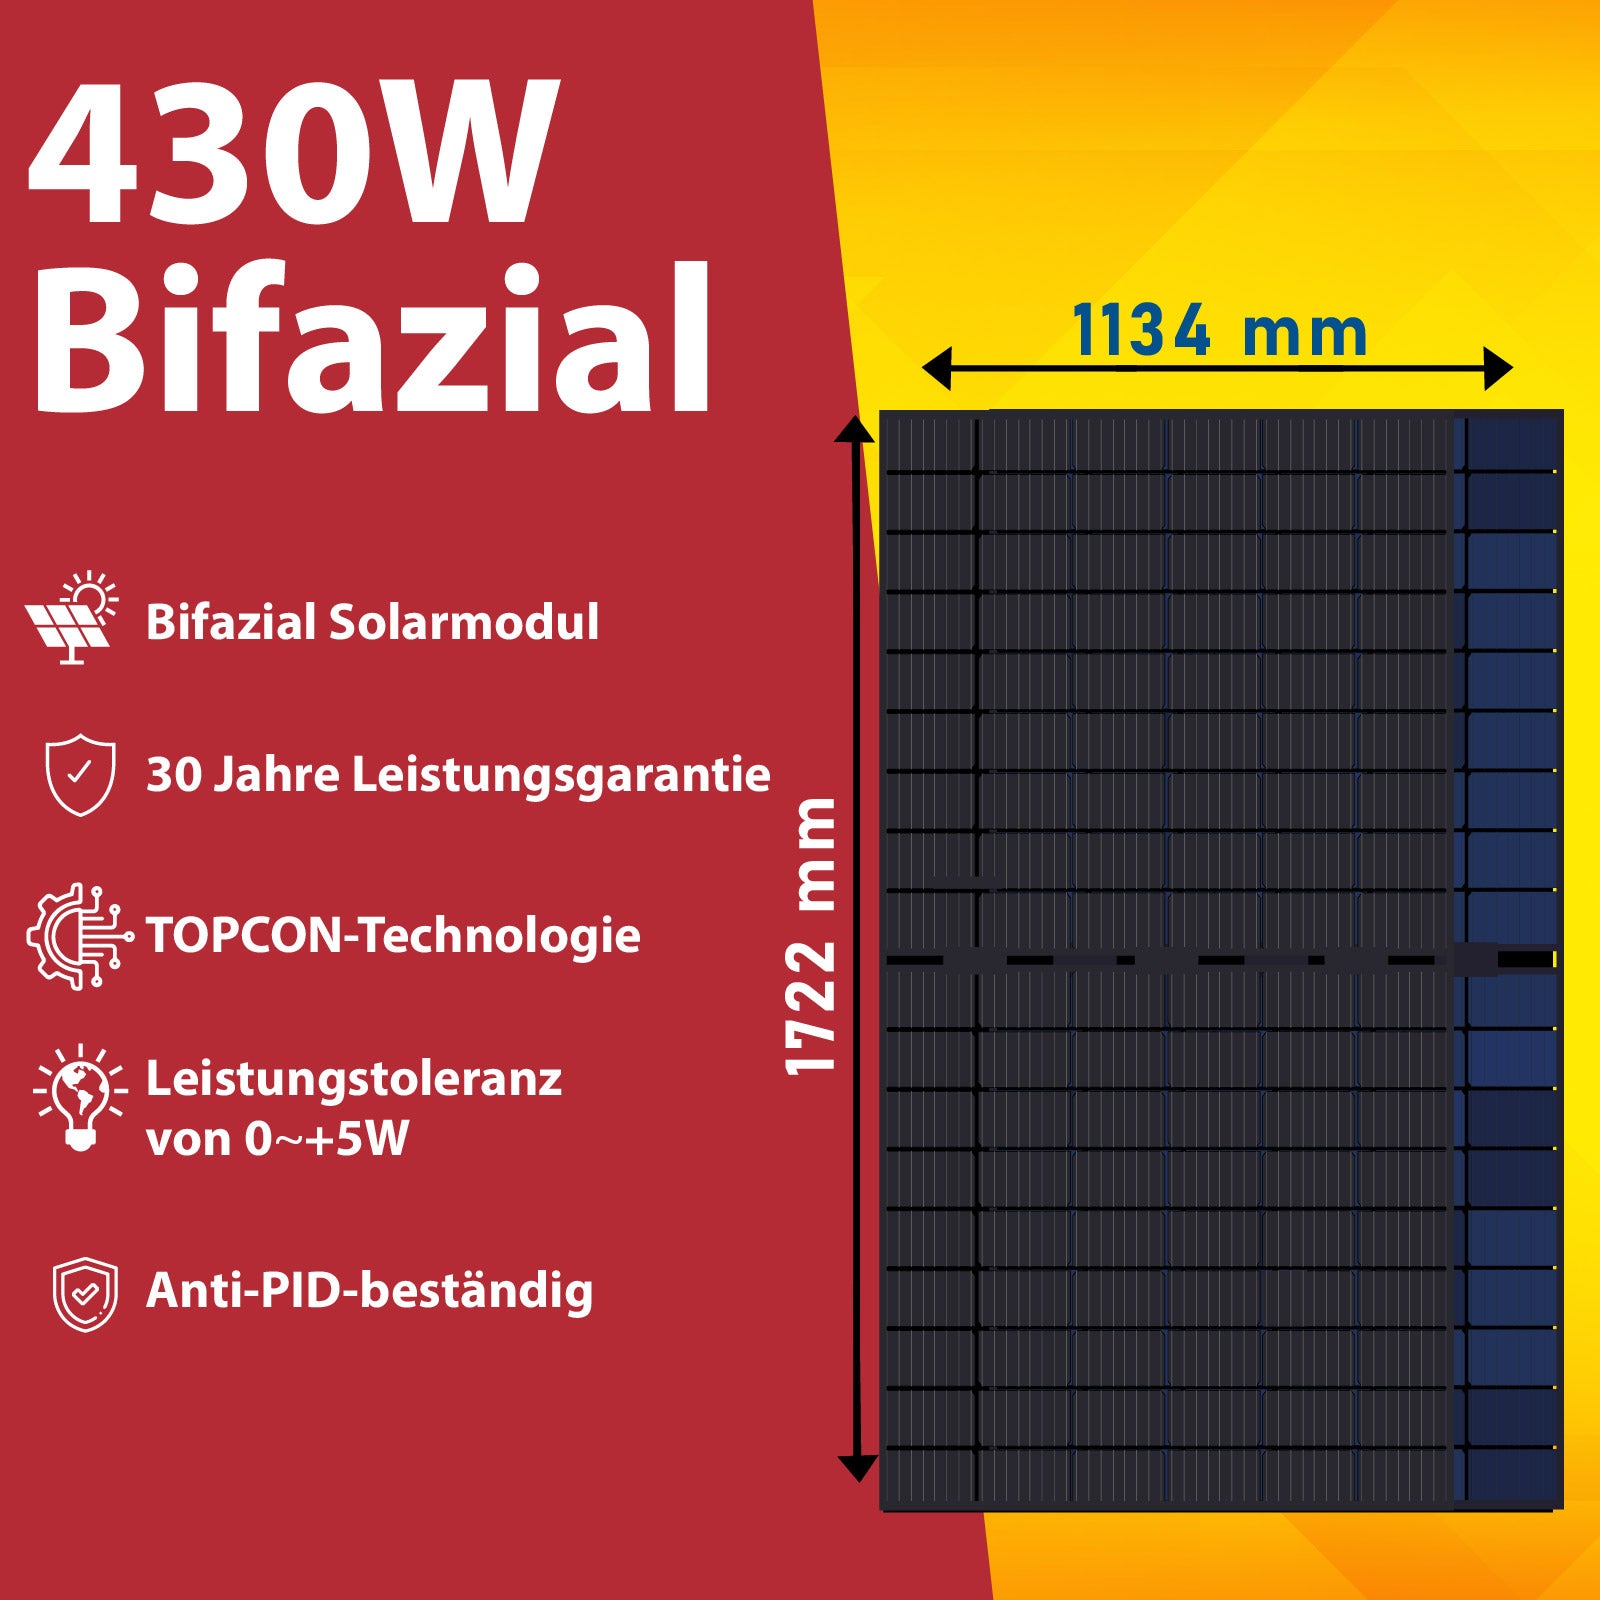 430W Bifazial Solarmodul Full Black Photovoltaik Glas-Glas Solarpanel